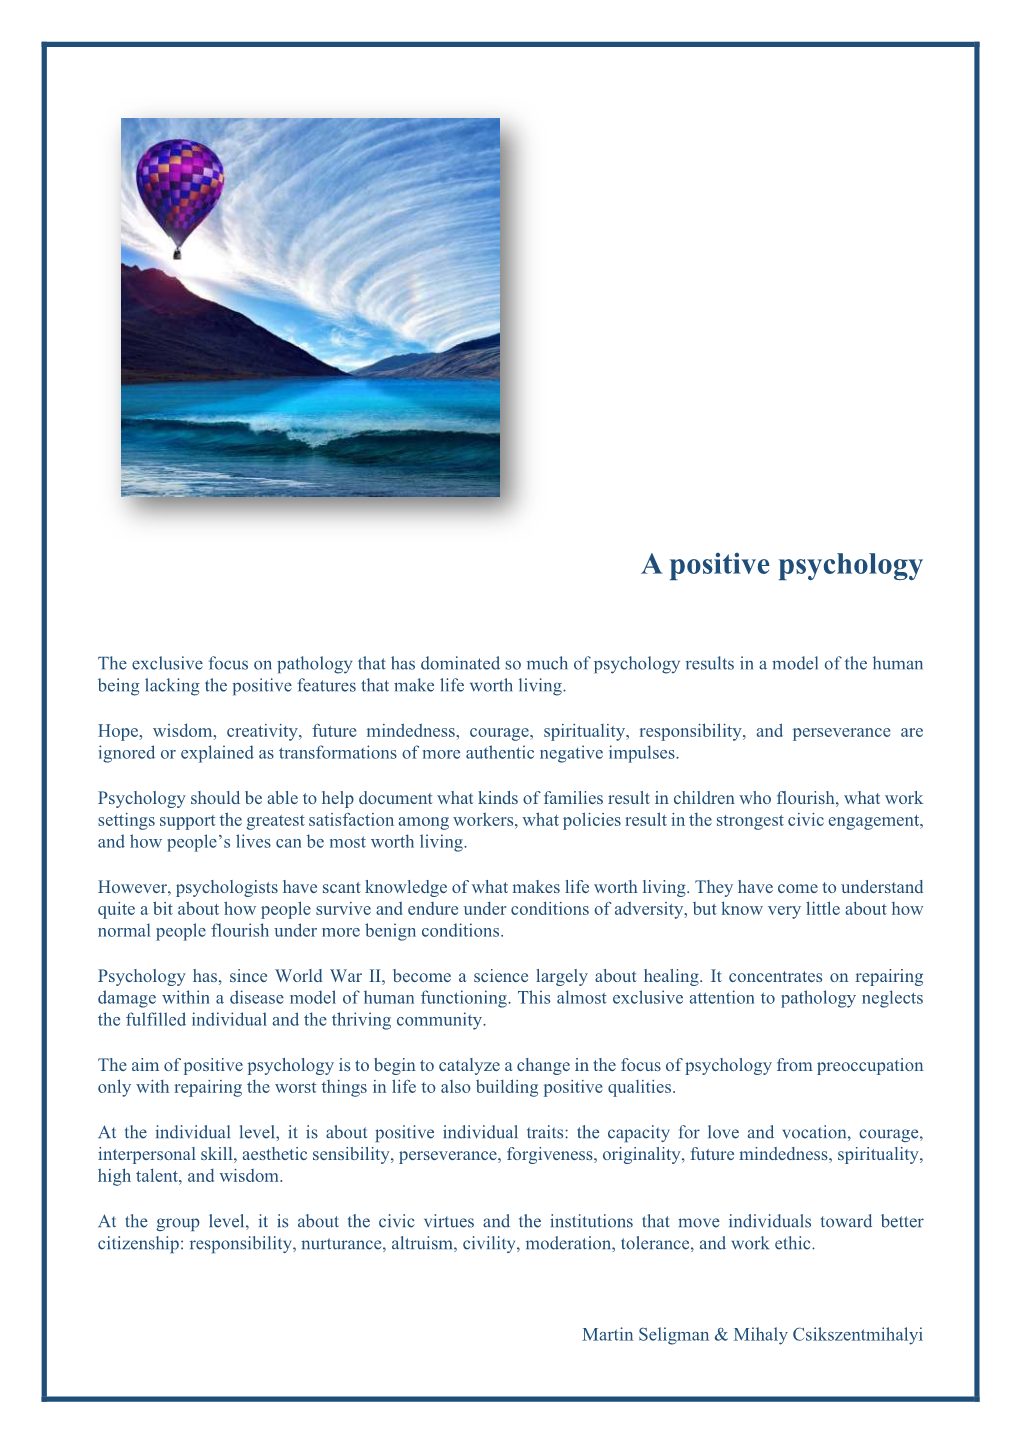 A Positive Psychology – Martin Seligman